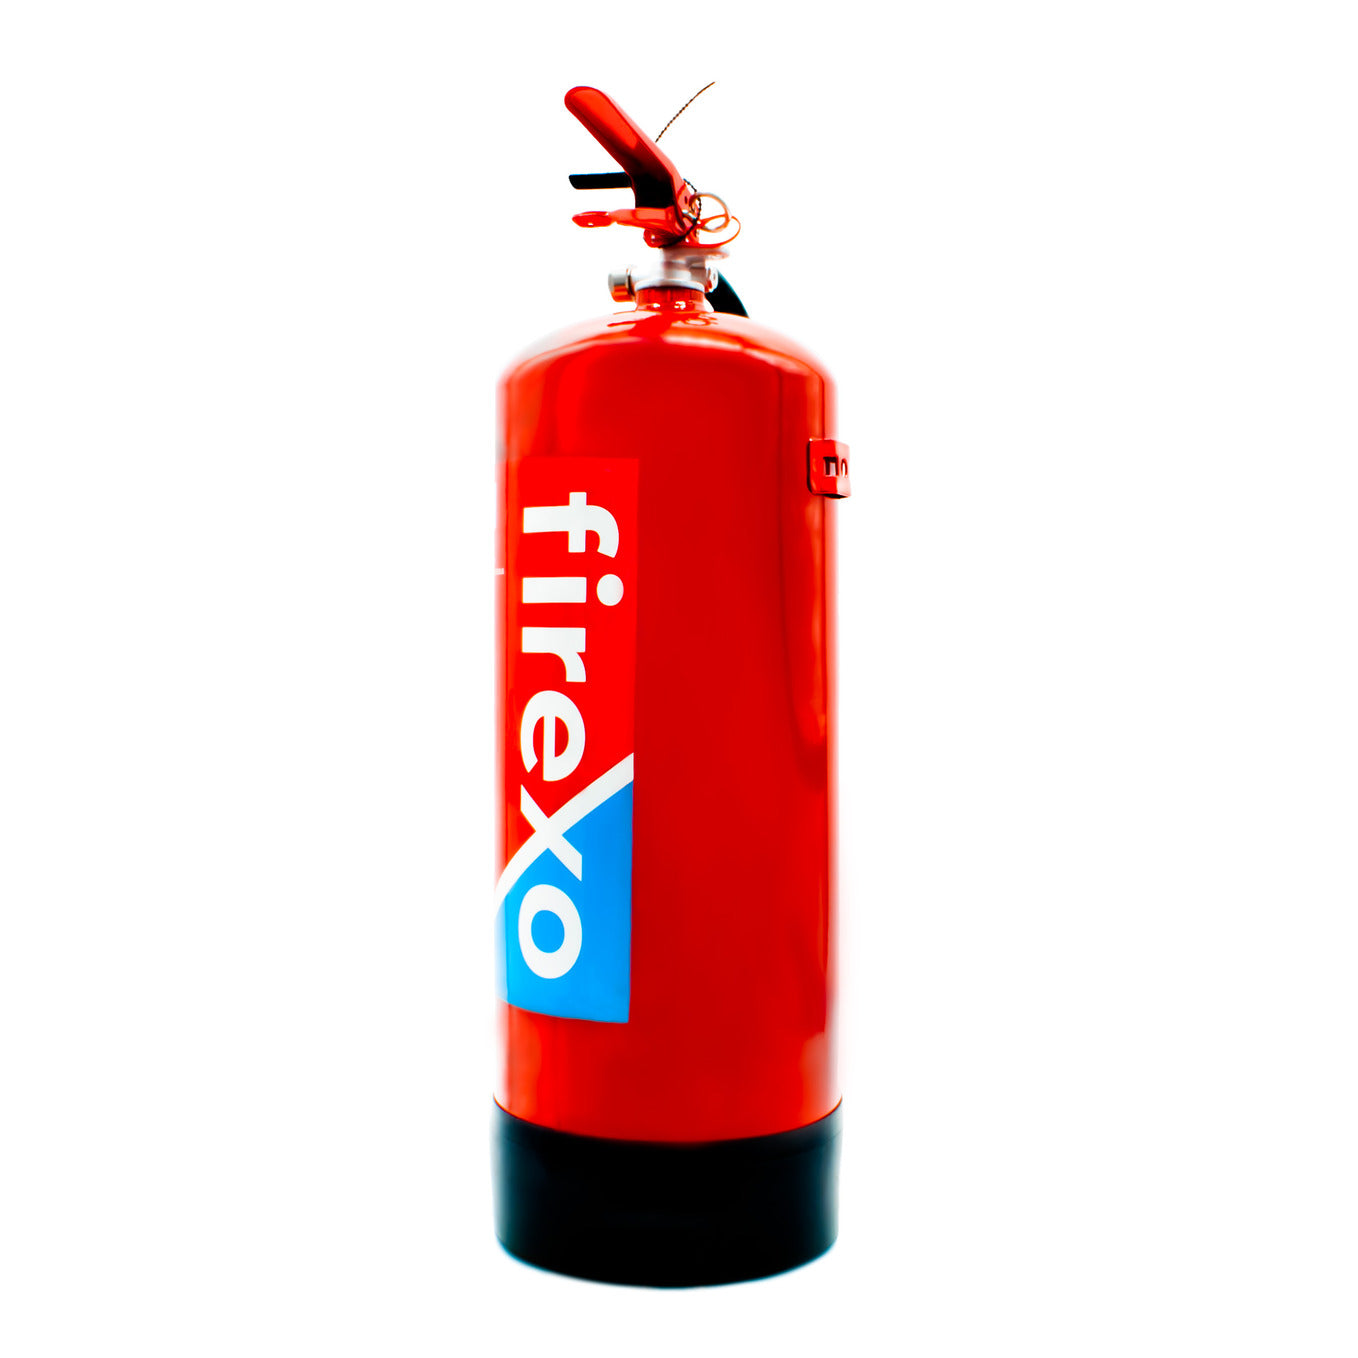 Firexo 9 Litre Fire Extinguisher